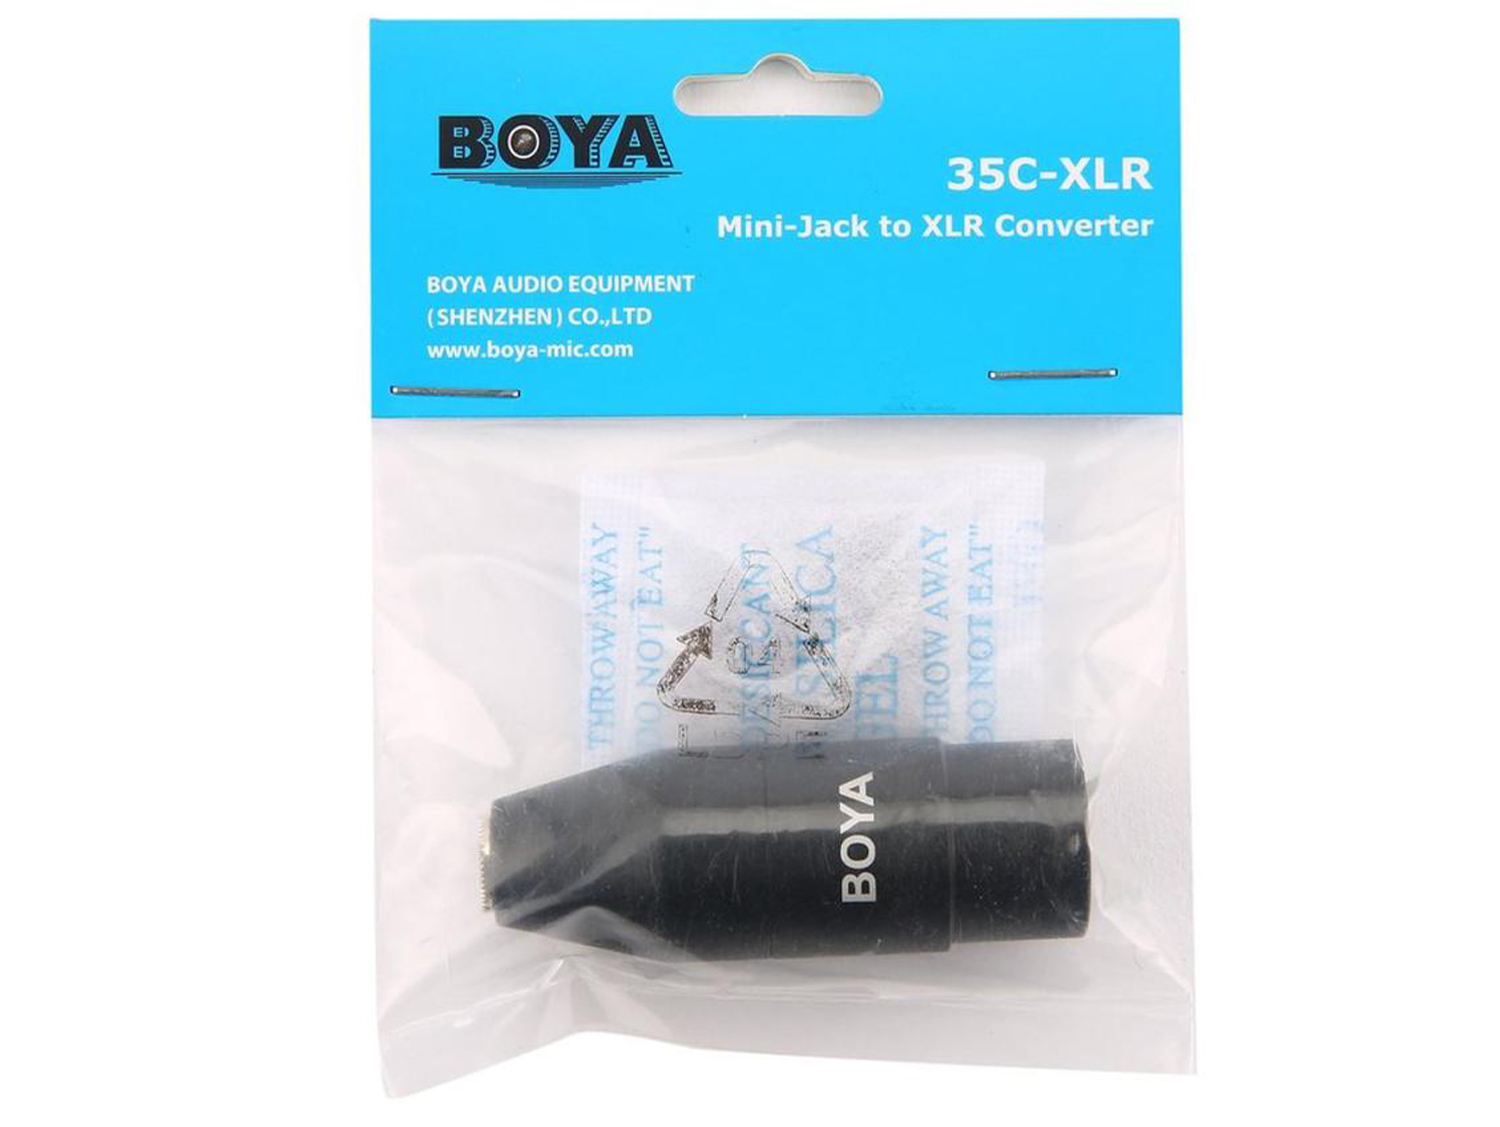 BOYA 35C-XLR Pro Adapter Convert 3.5mm Input to Male XLR Output